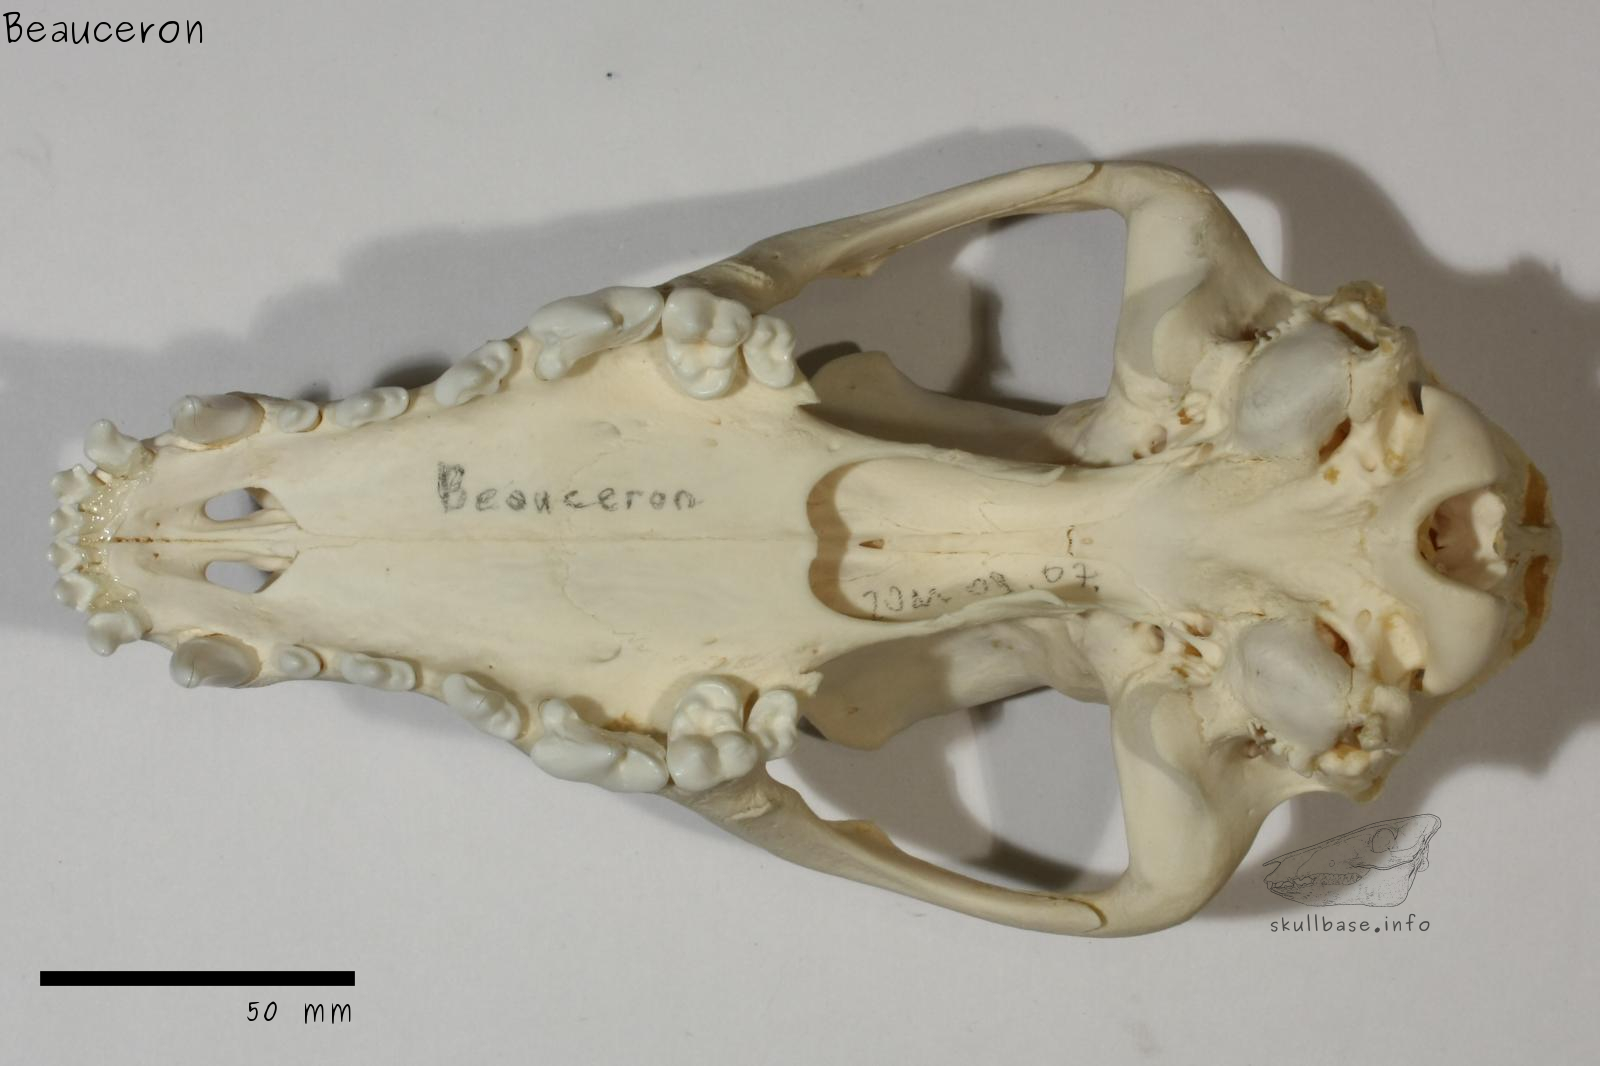 Beauceron (Canis lupus familiaris) skull ventral view